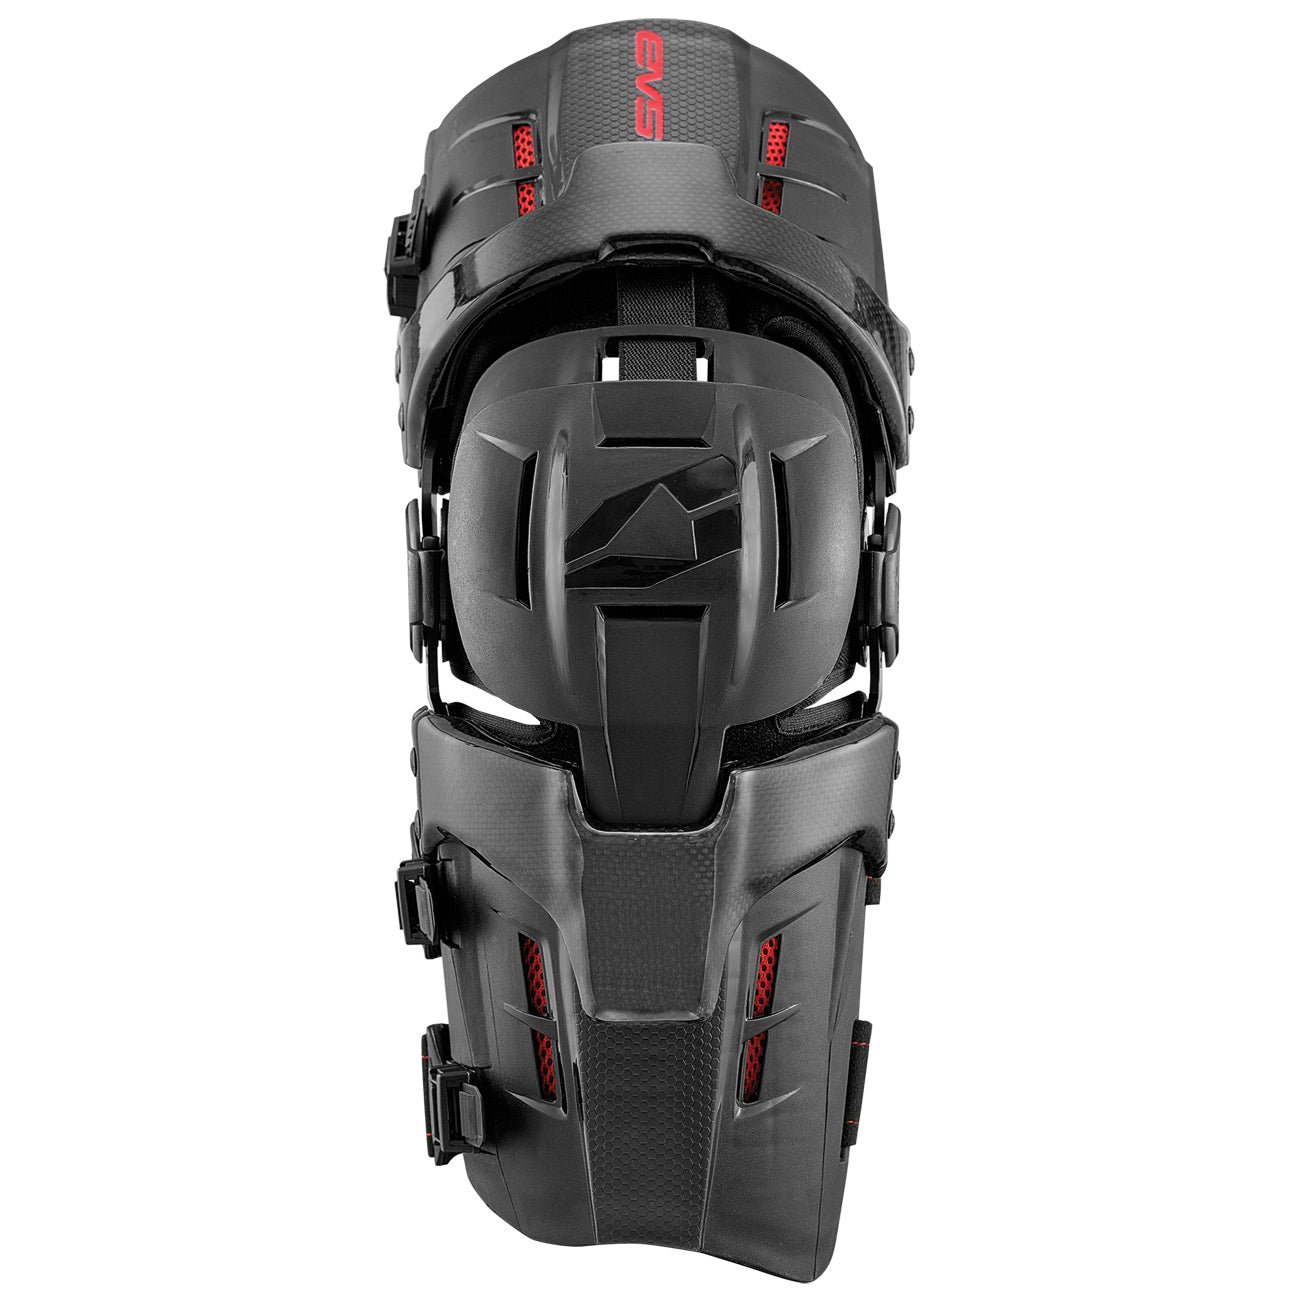 EVS Sports 2013 RS8 Pro Knee Brace - Reviews, Comparisons, Specs -  Knee/Shin Pads - Vital MTB